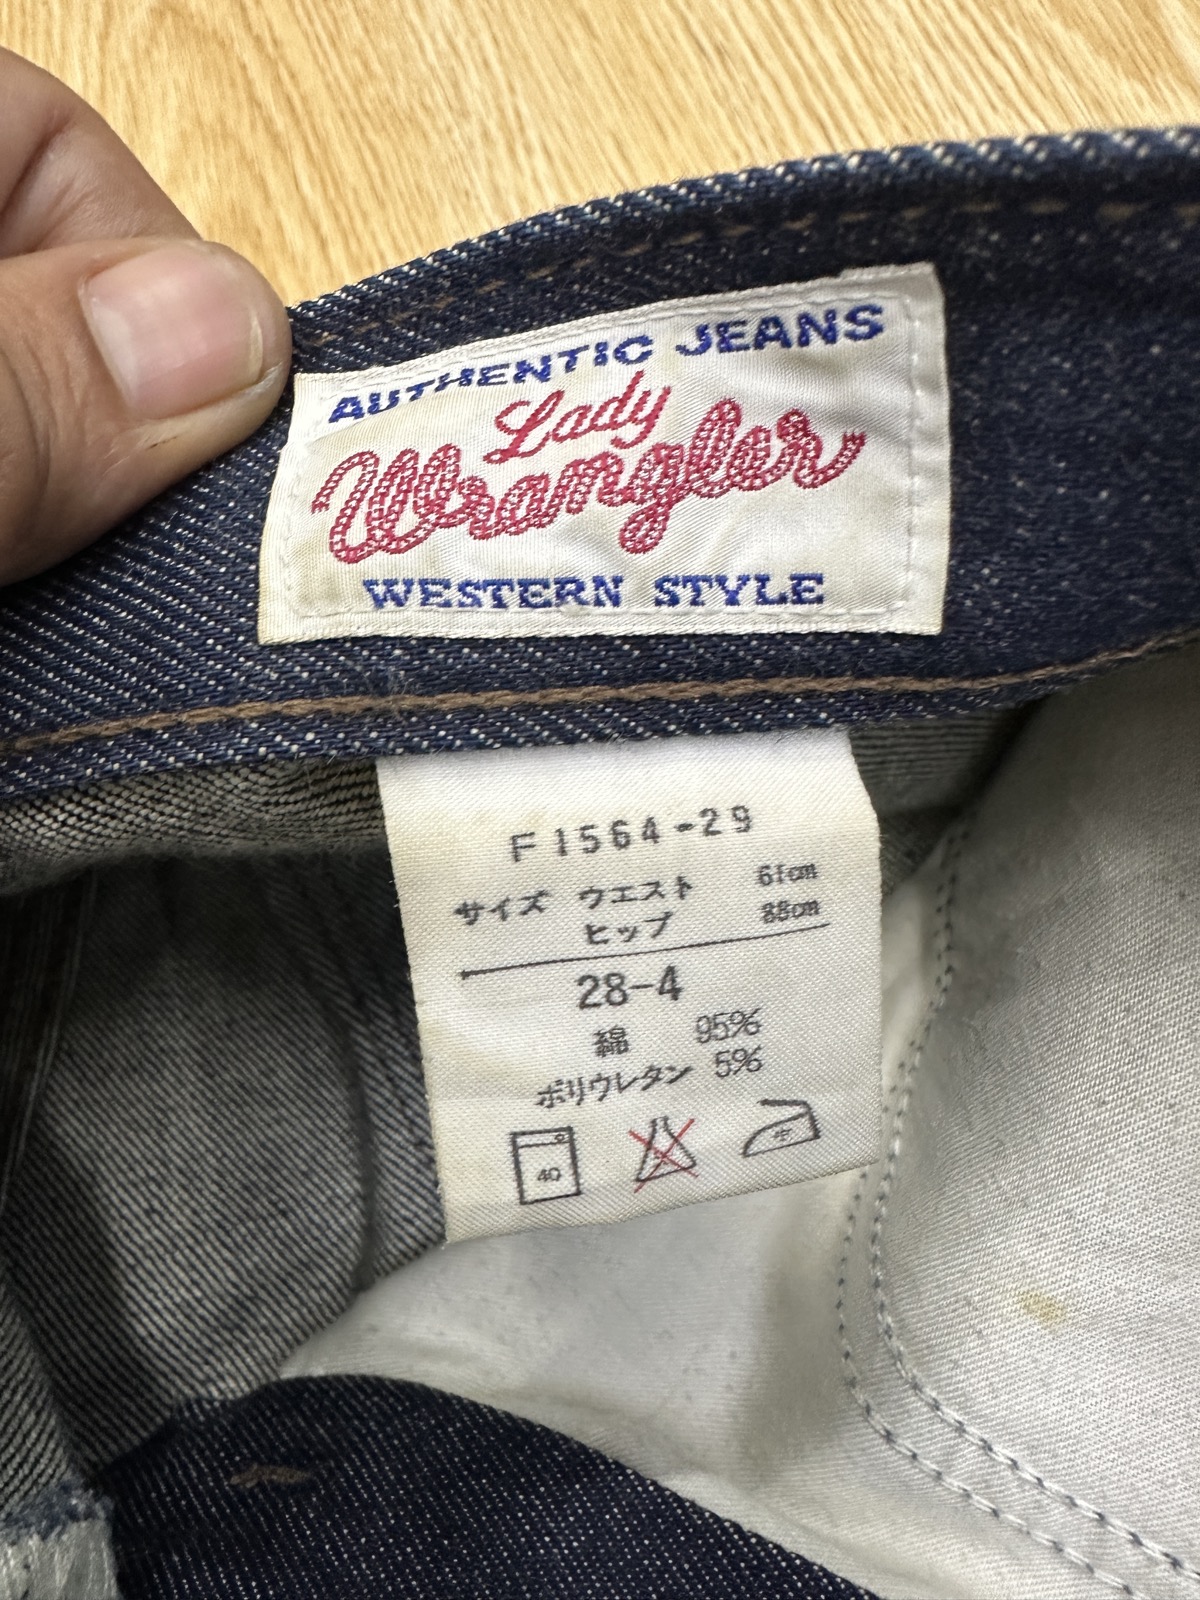 Buy 1960s Wrangler Bluebell Jeans, Western Jeans, 34 Waist, True